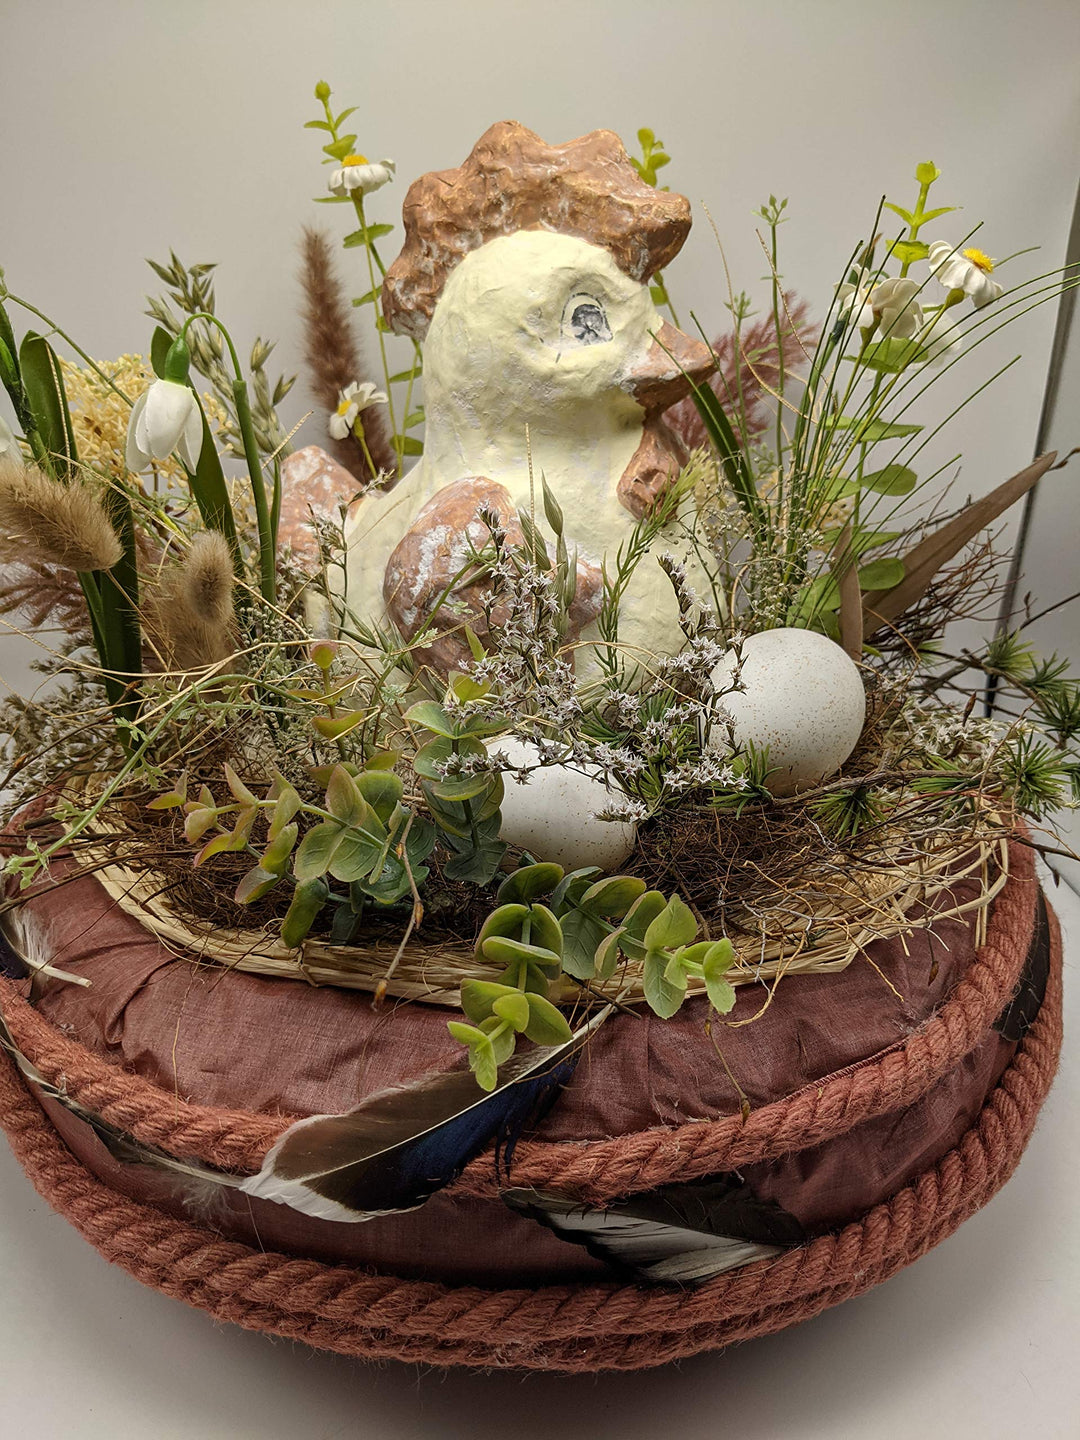 Ostergesteck Frühlingsgesteck Seidenblumen Huhn Eier Schneeglöckchen creme braun XL